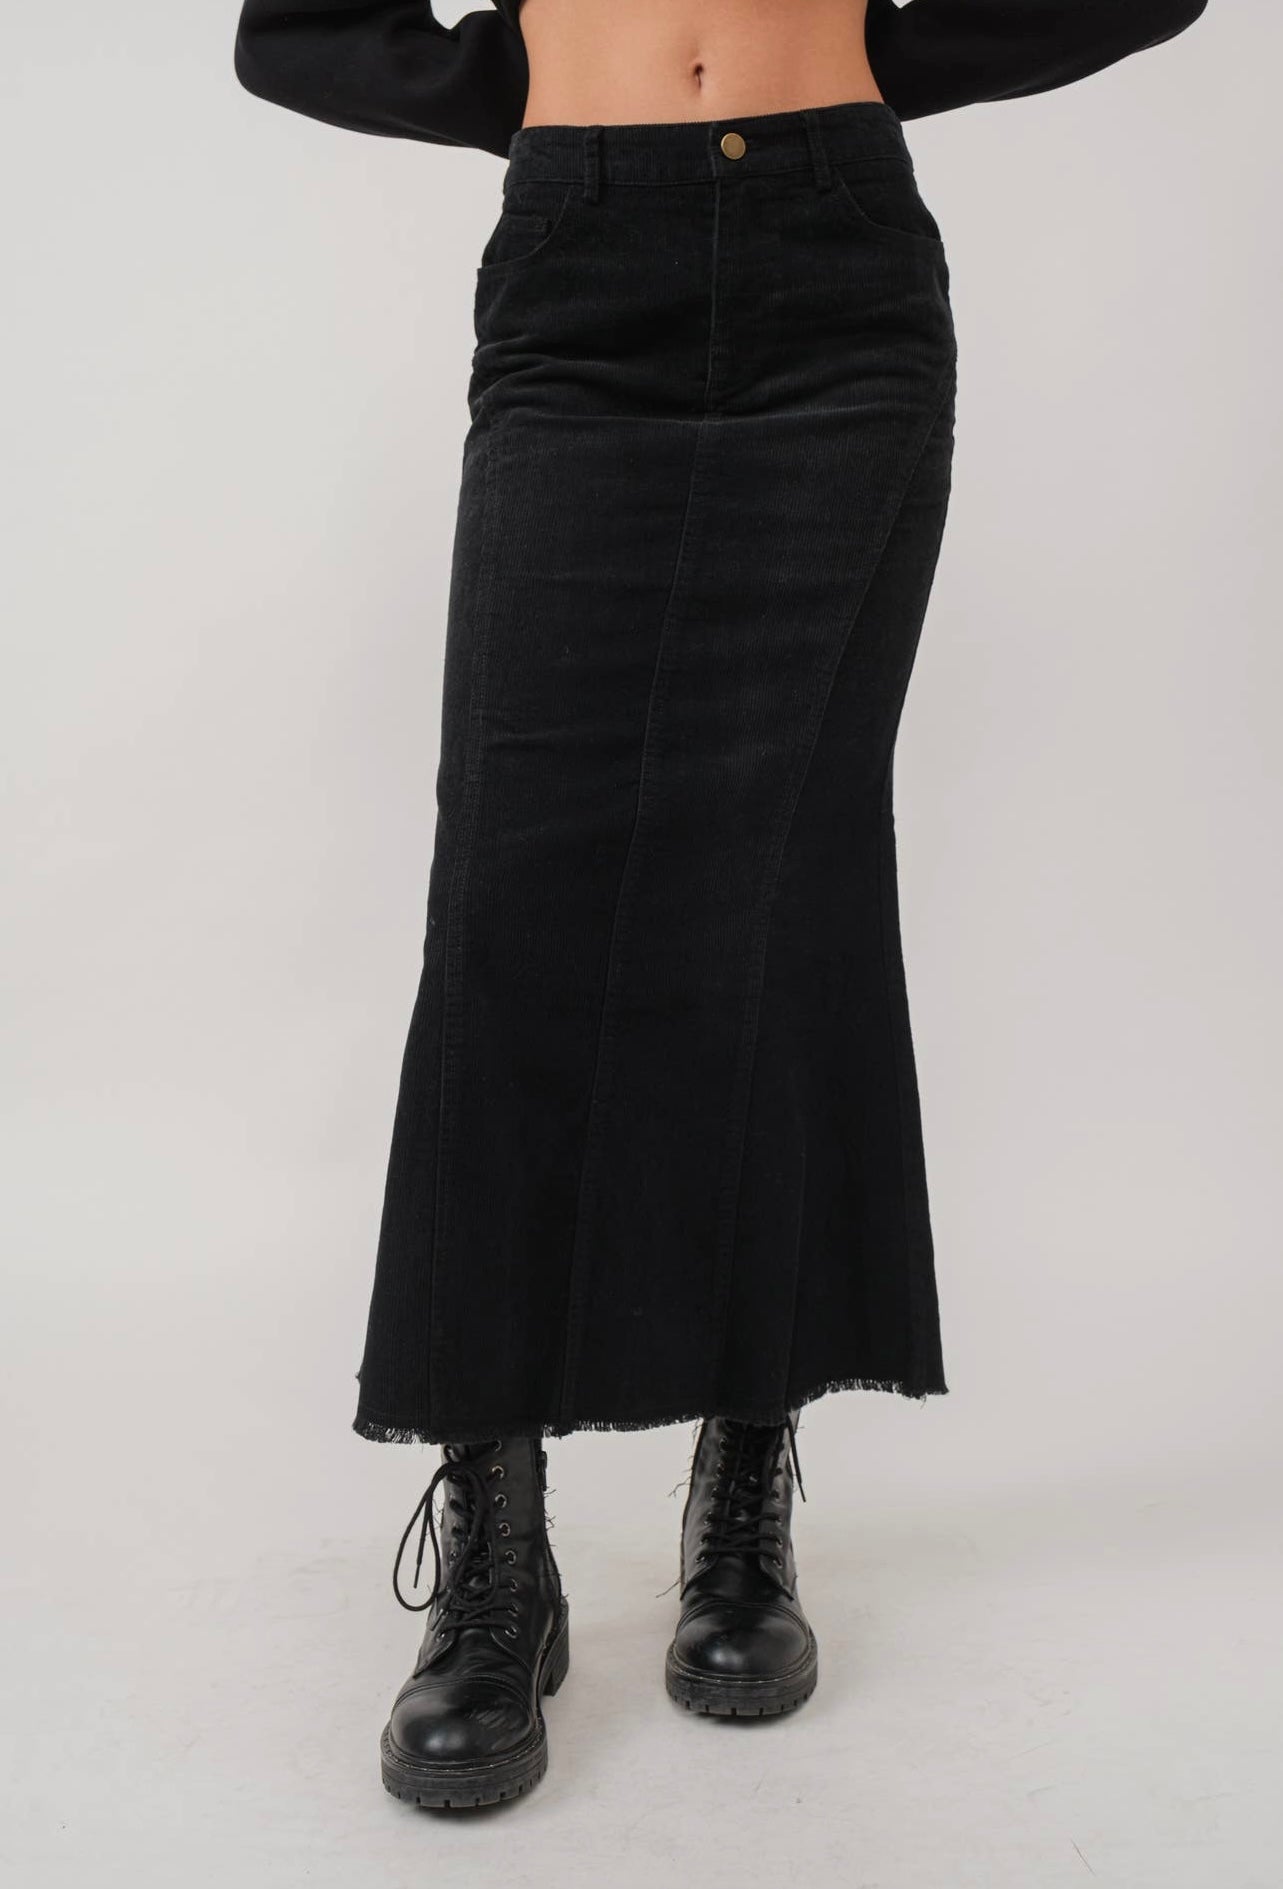 Monroe Black Corduroy Maxi Skirt